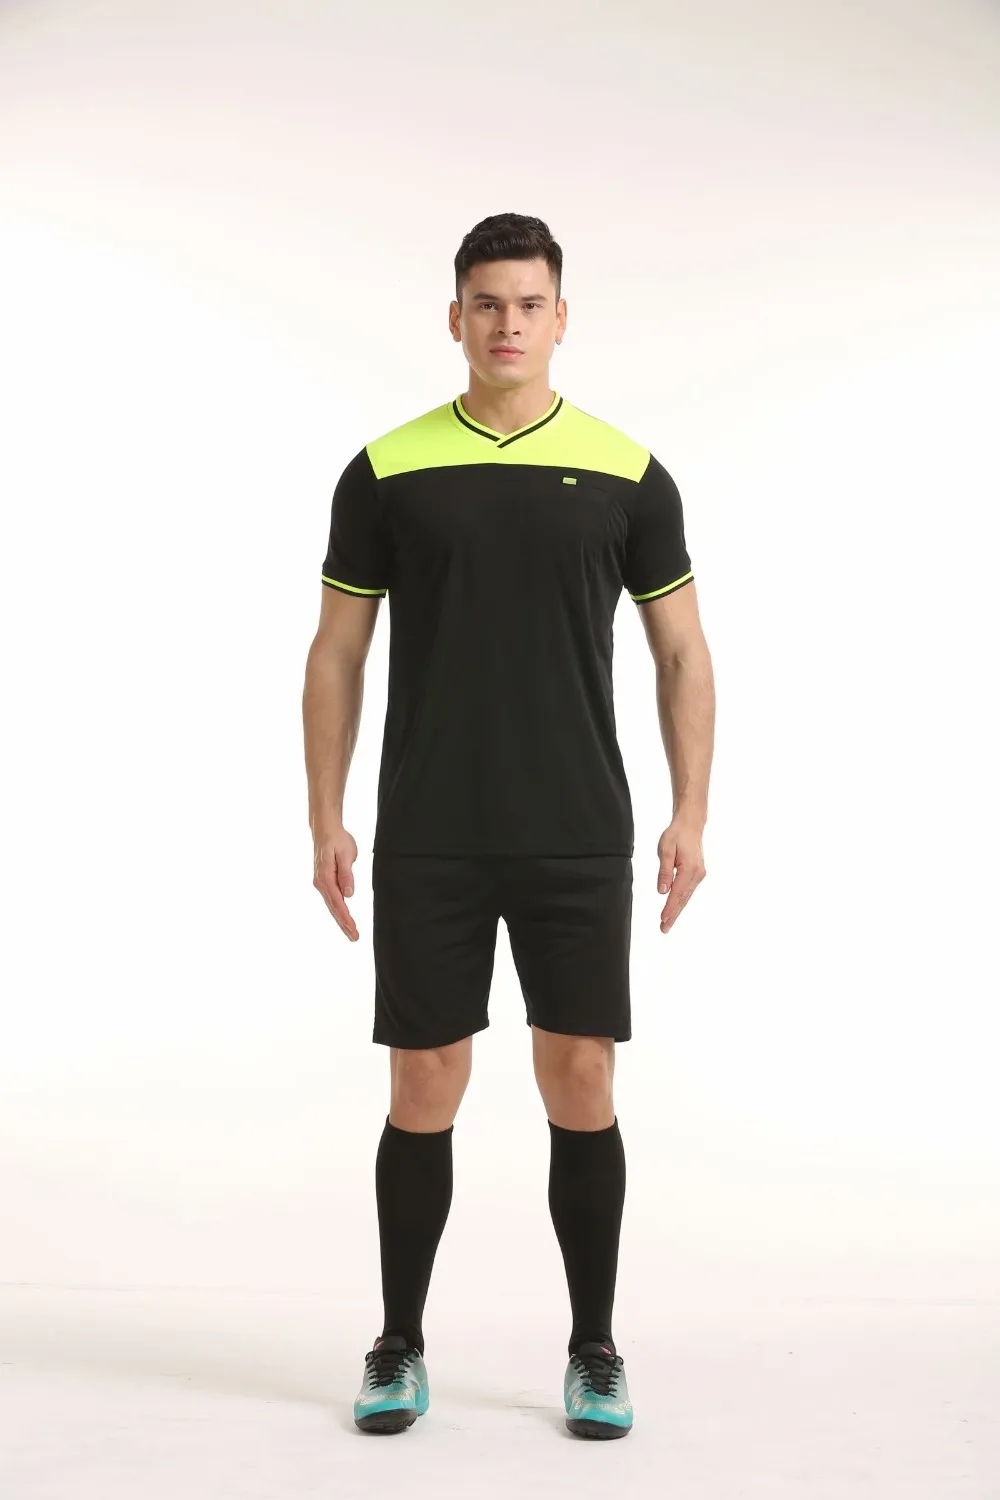 Soccer Referee Jerseys Kit Professional Competition Referee Clothing V-neck Football Judge Uniforms Short Sportswear